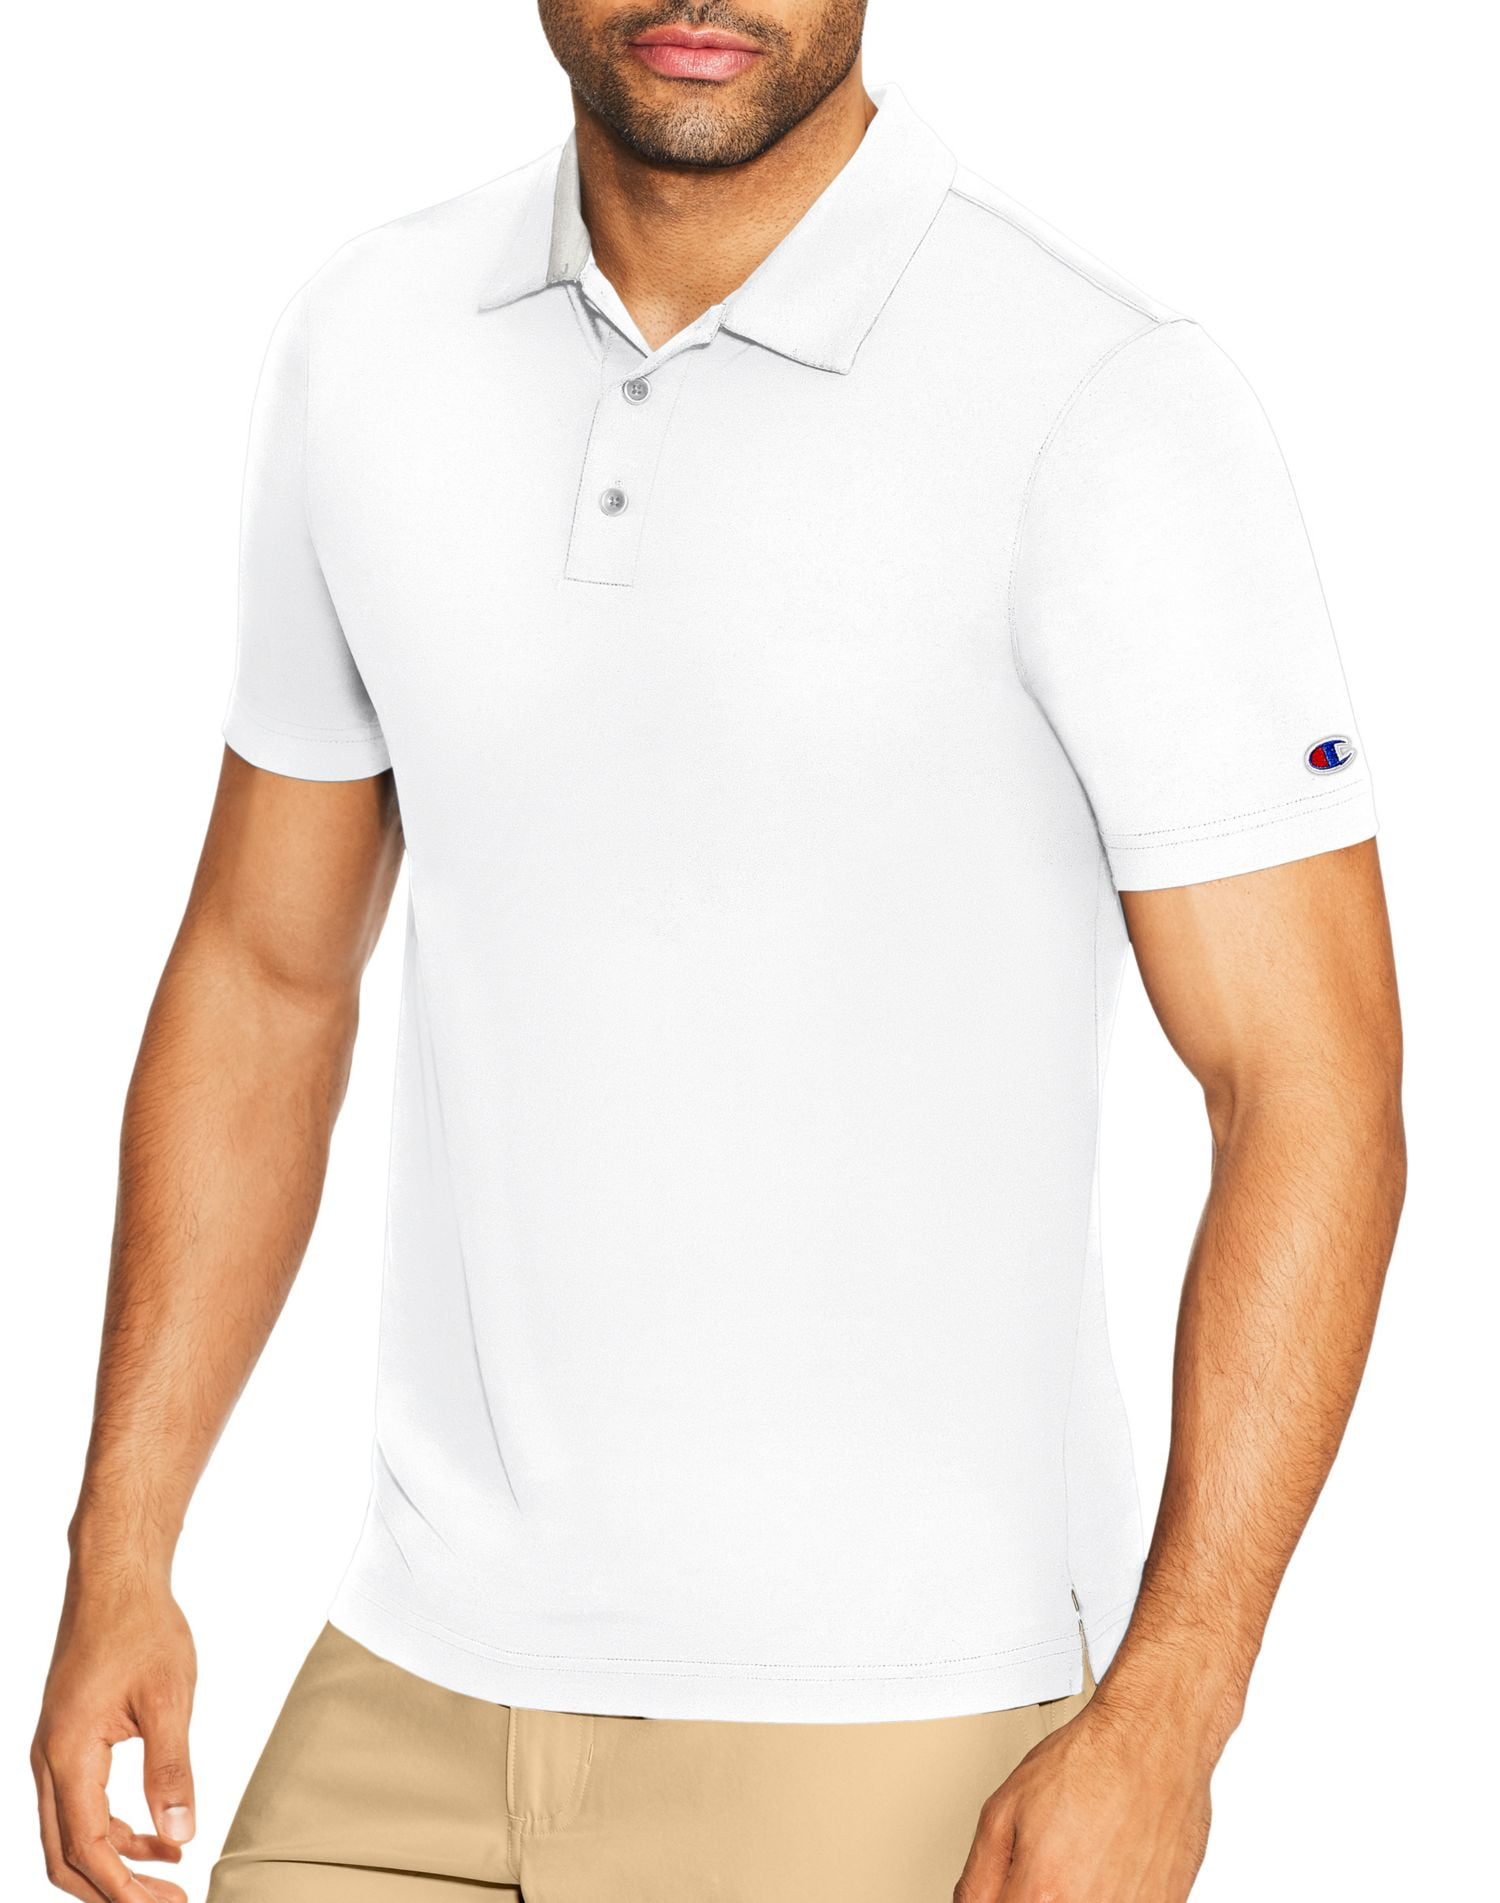 champion golf shirts